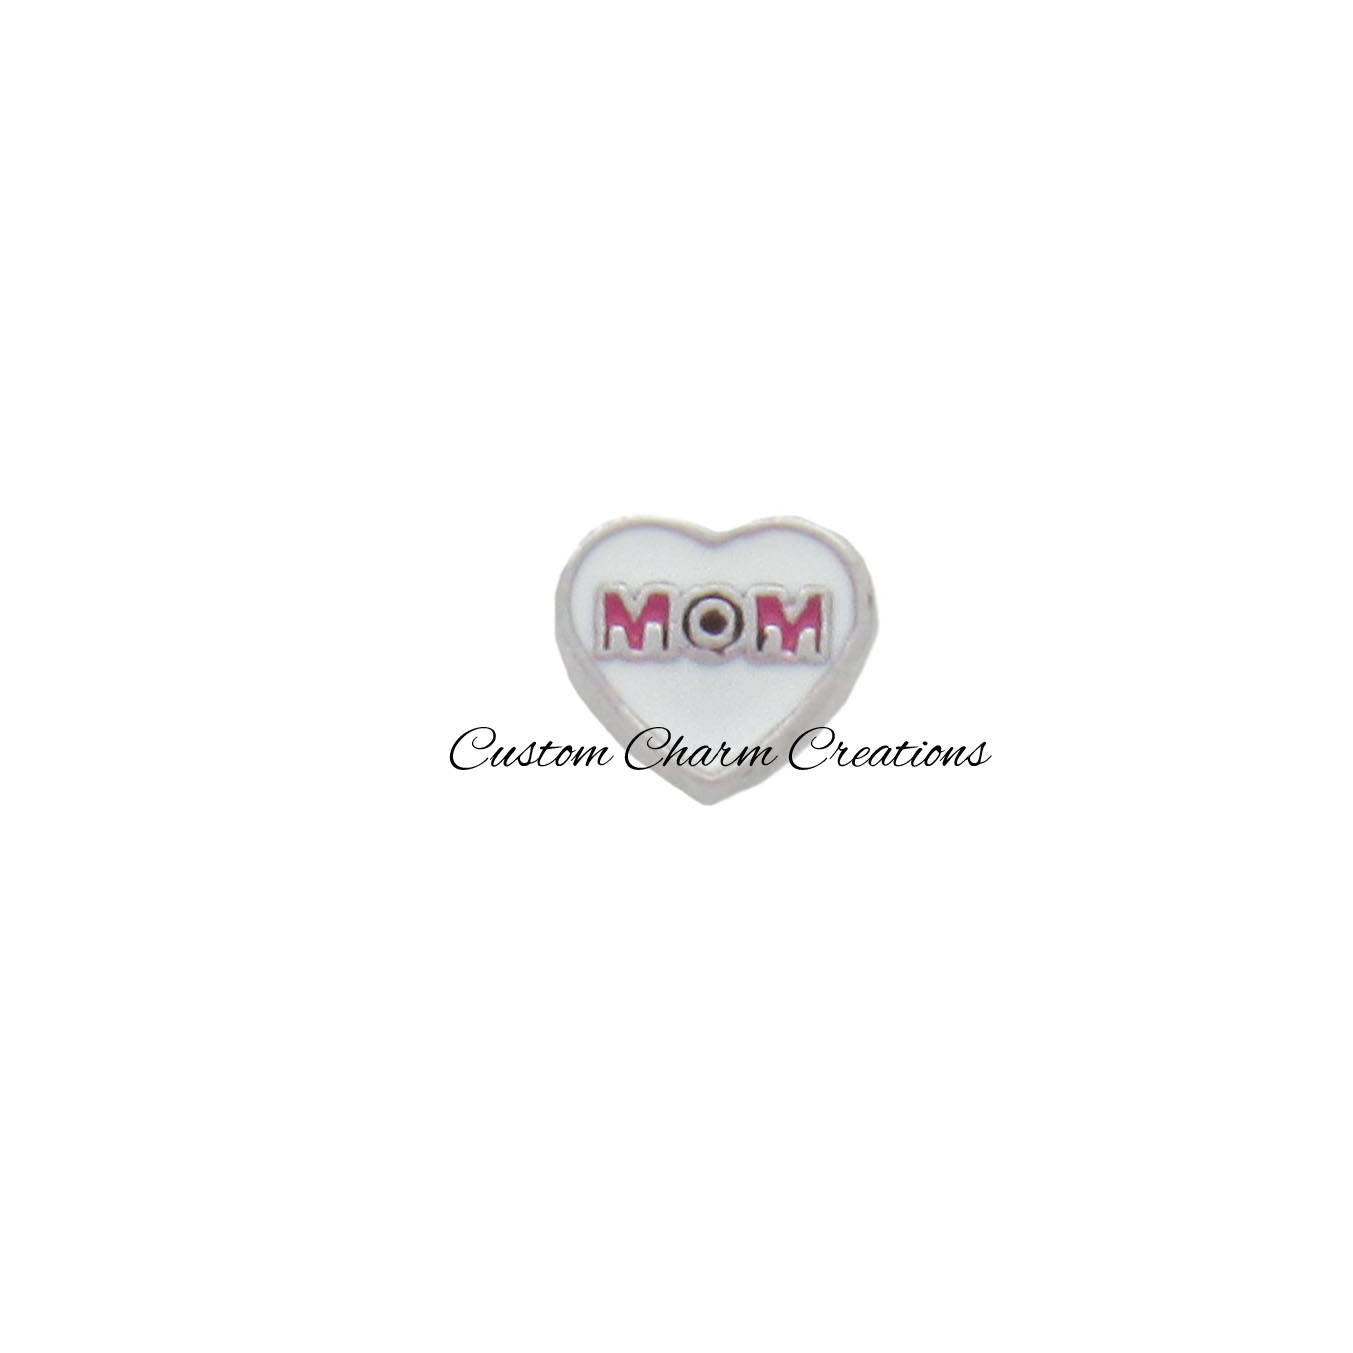 Mom White Heart Floating Locket Charm - Custom Charm Creations